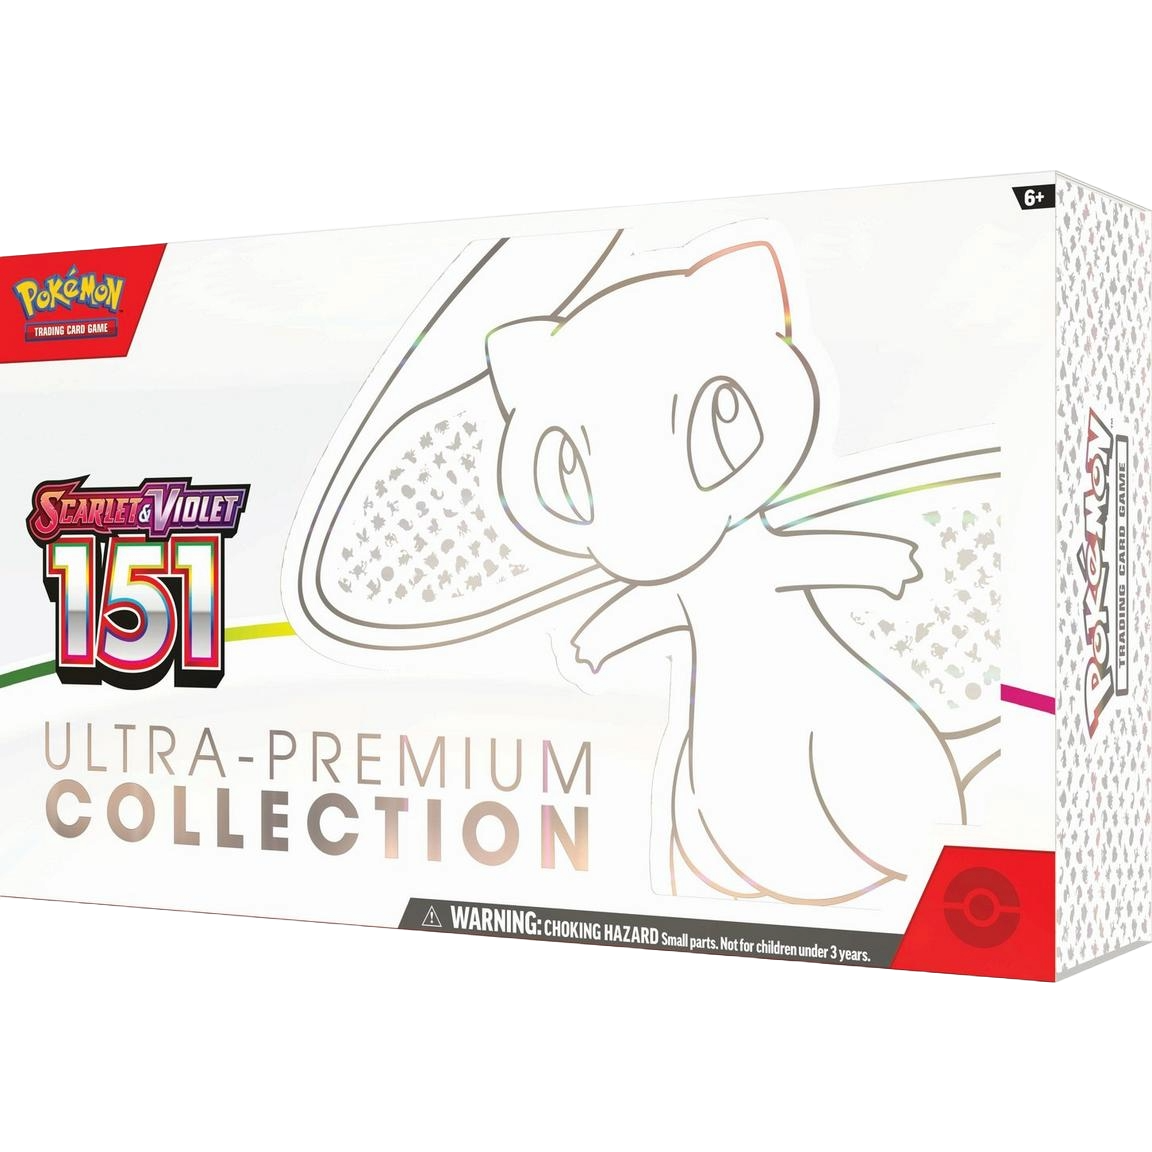 Pokemon TCG: 151 Special Set – Pokemon Plug